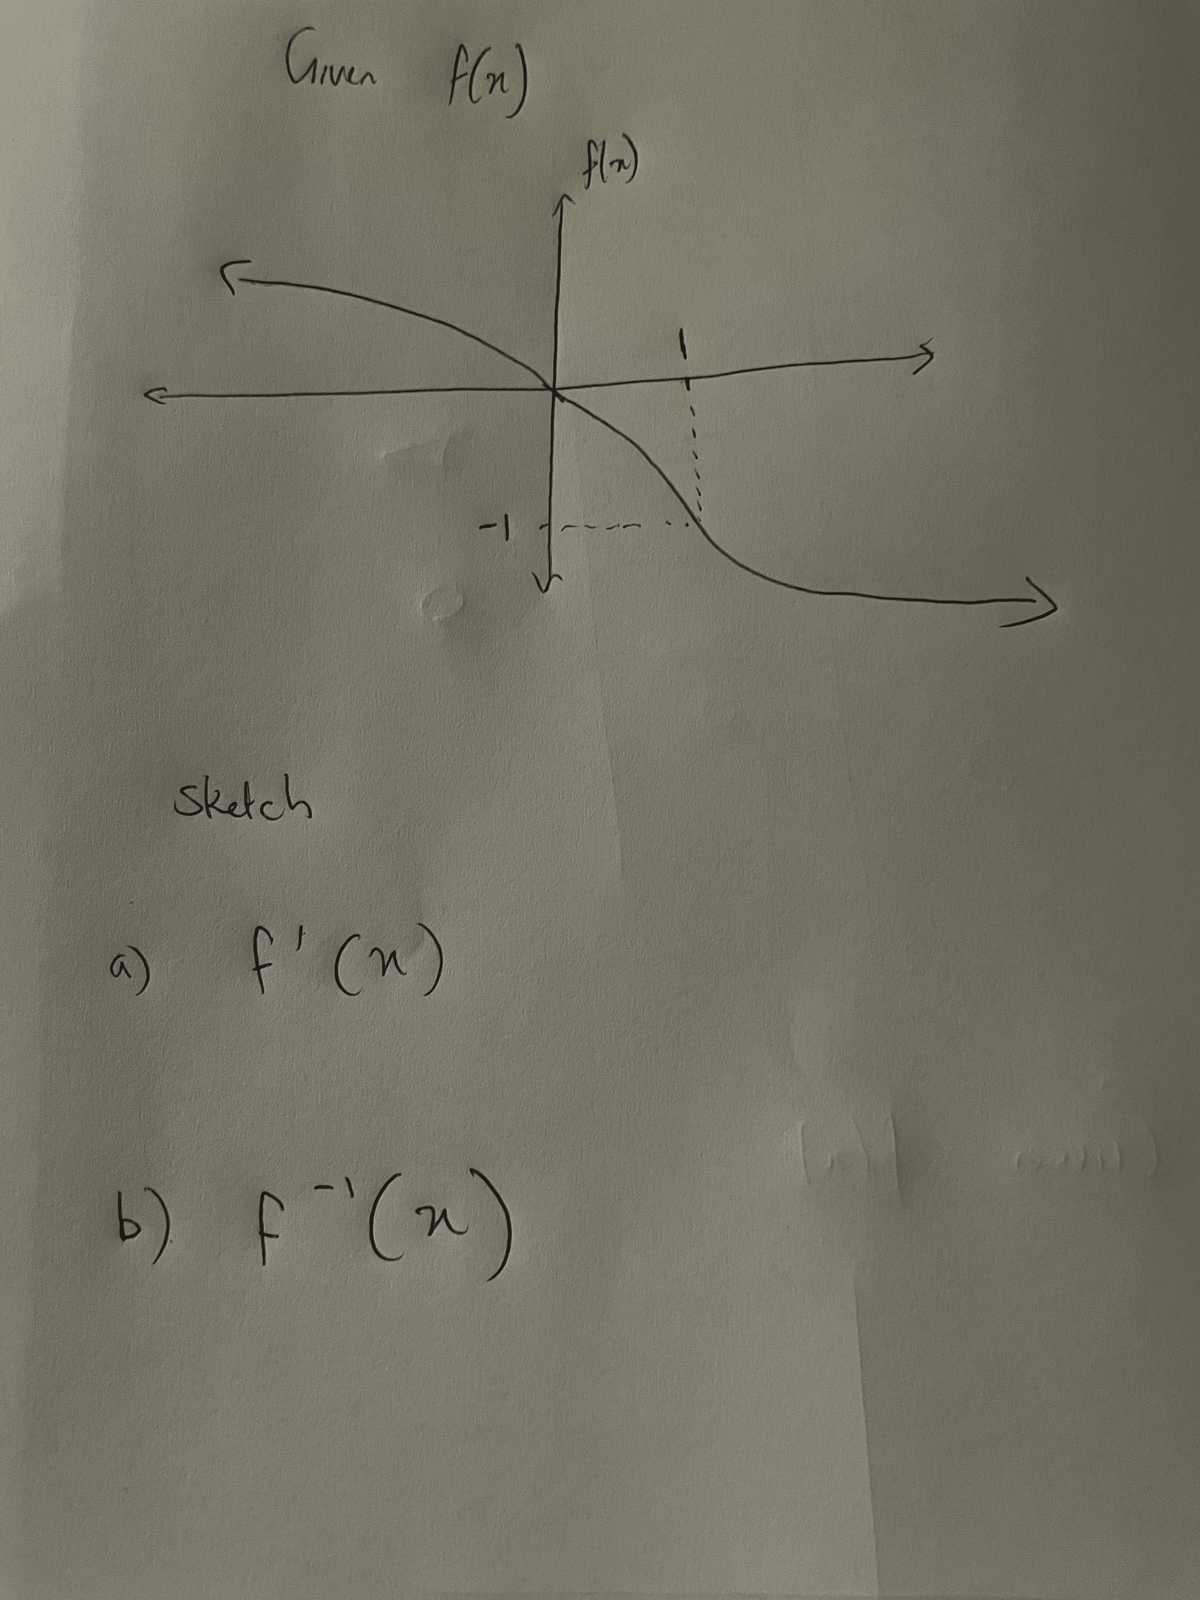 Given f(n)
sketch
a) f'(n)
-1
b) F"(x)
f(x)